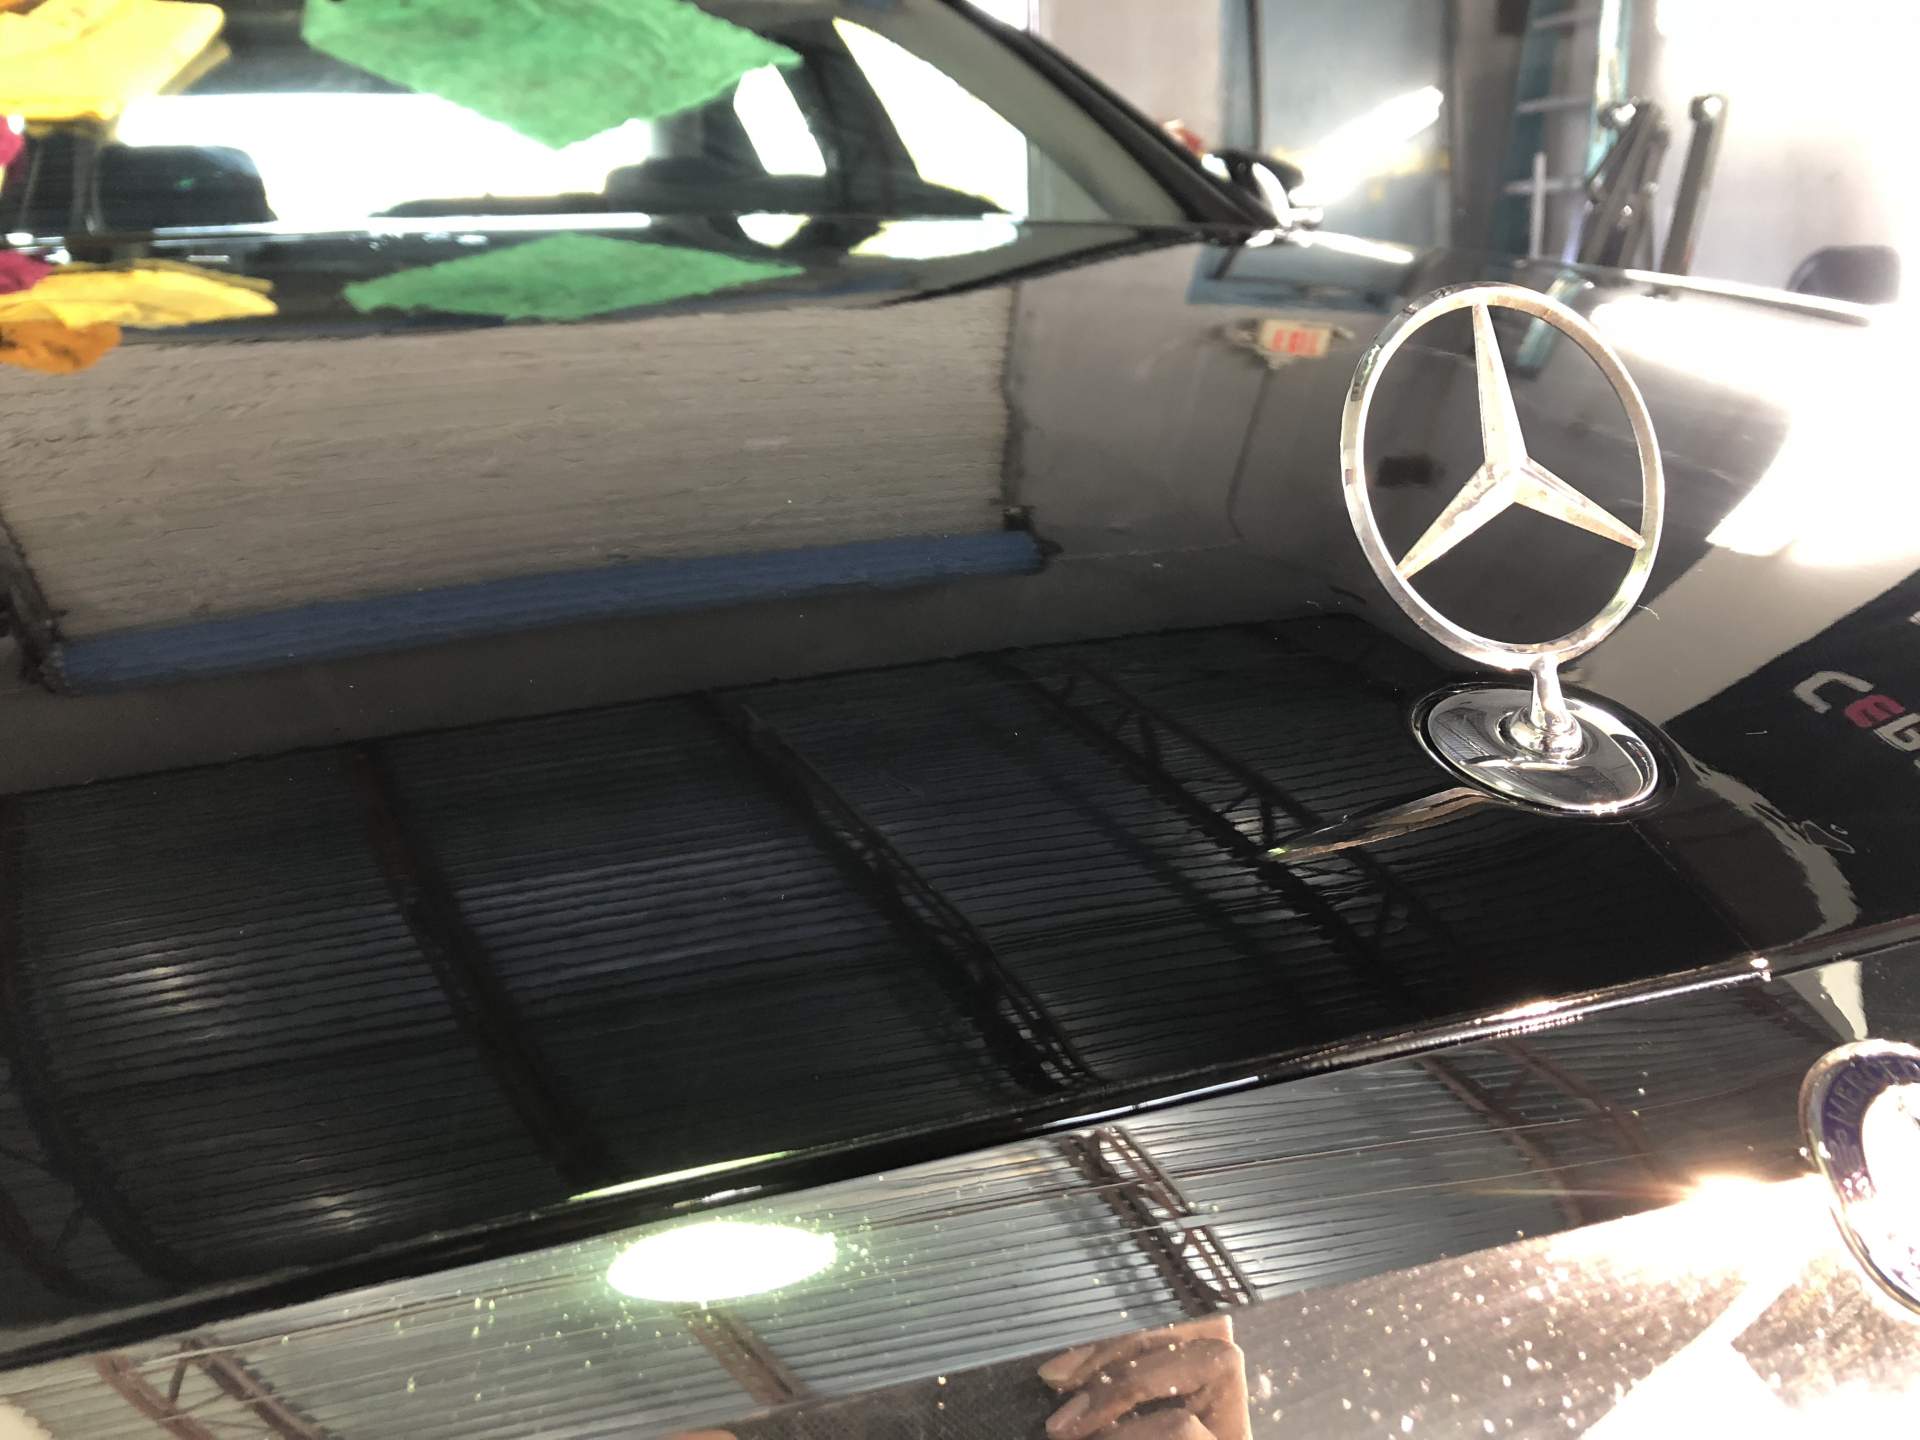 Black Mercedes hood all shined up